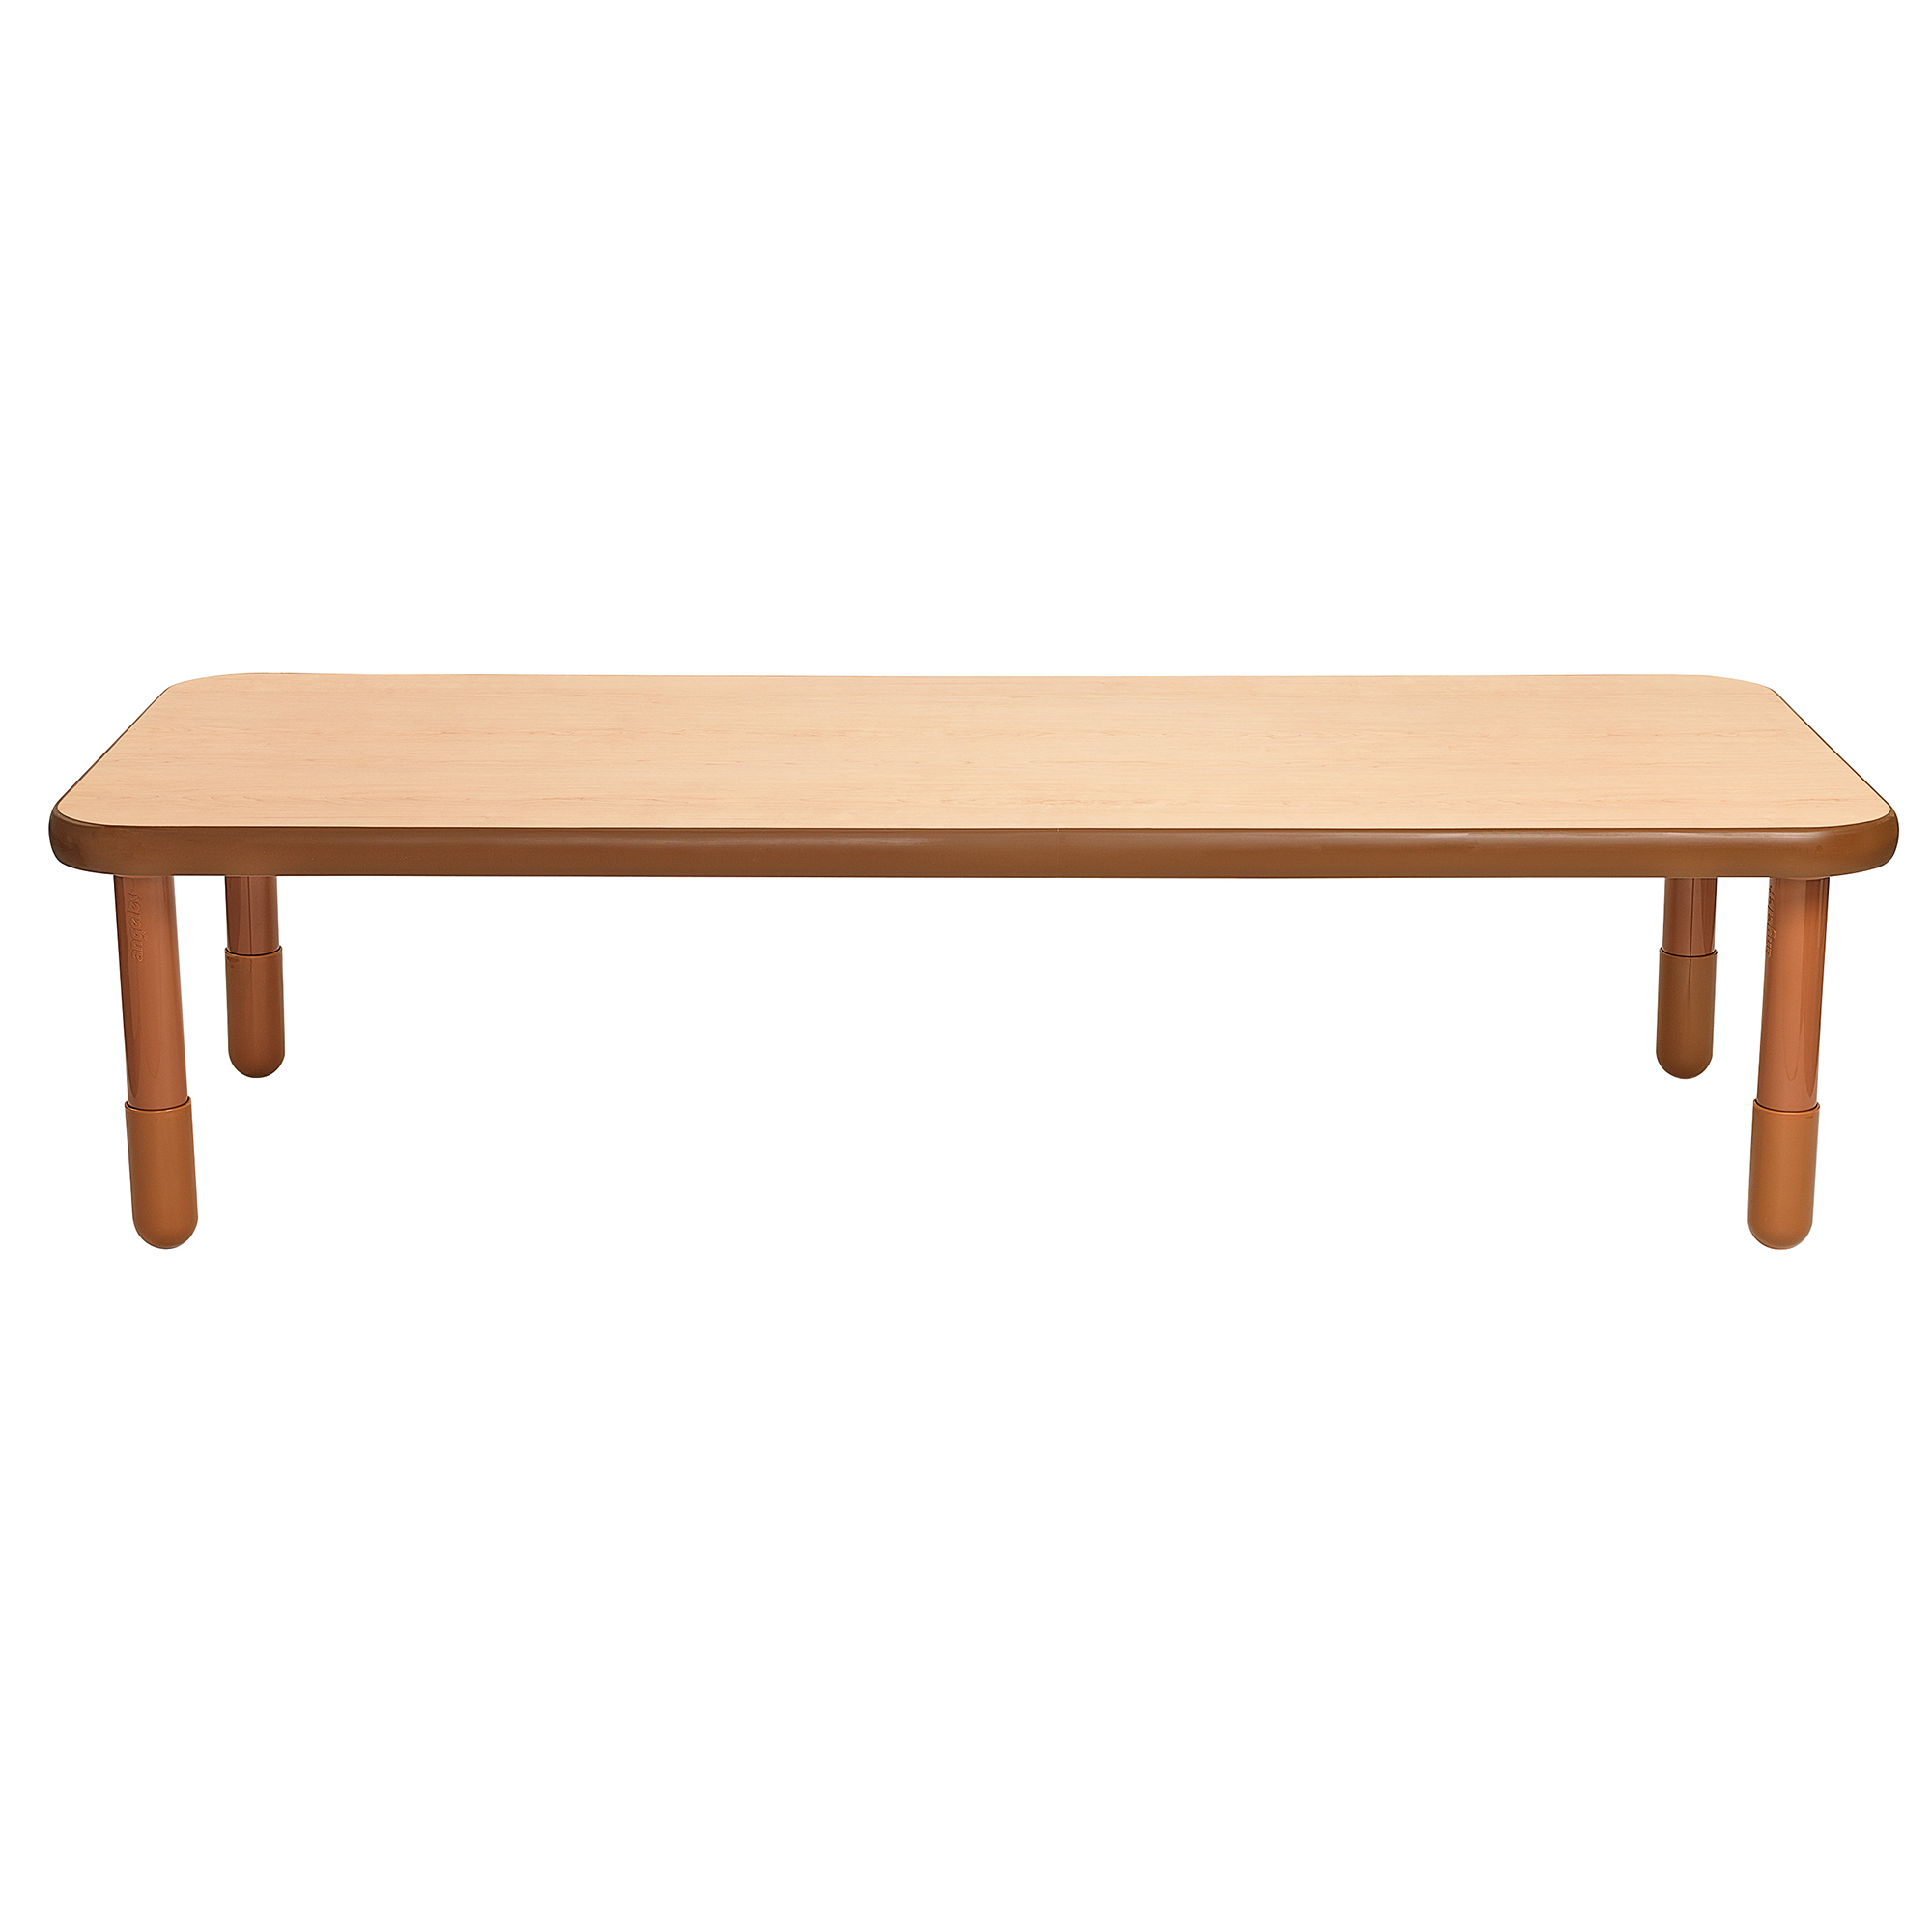 BaseLine® 183 cm  x 76 cm  Rectangular Table - Natural Wood with 45,5 cm  Legs